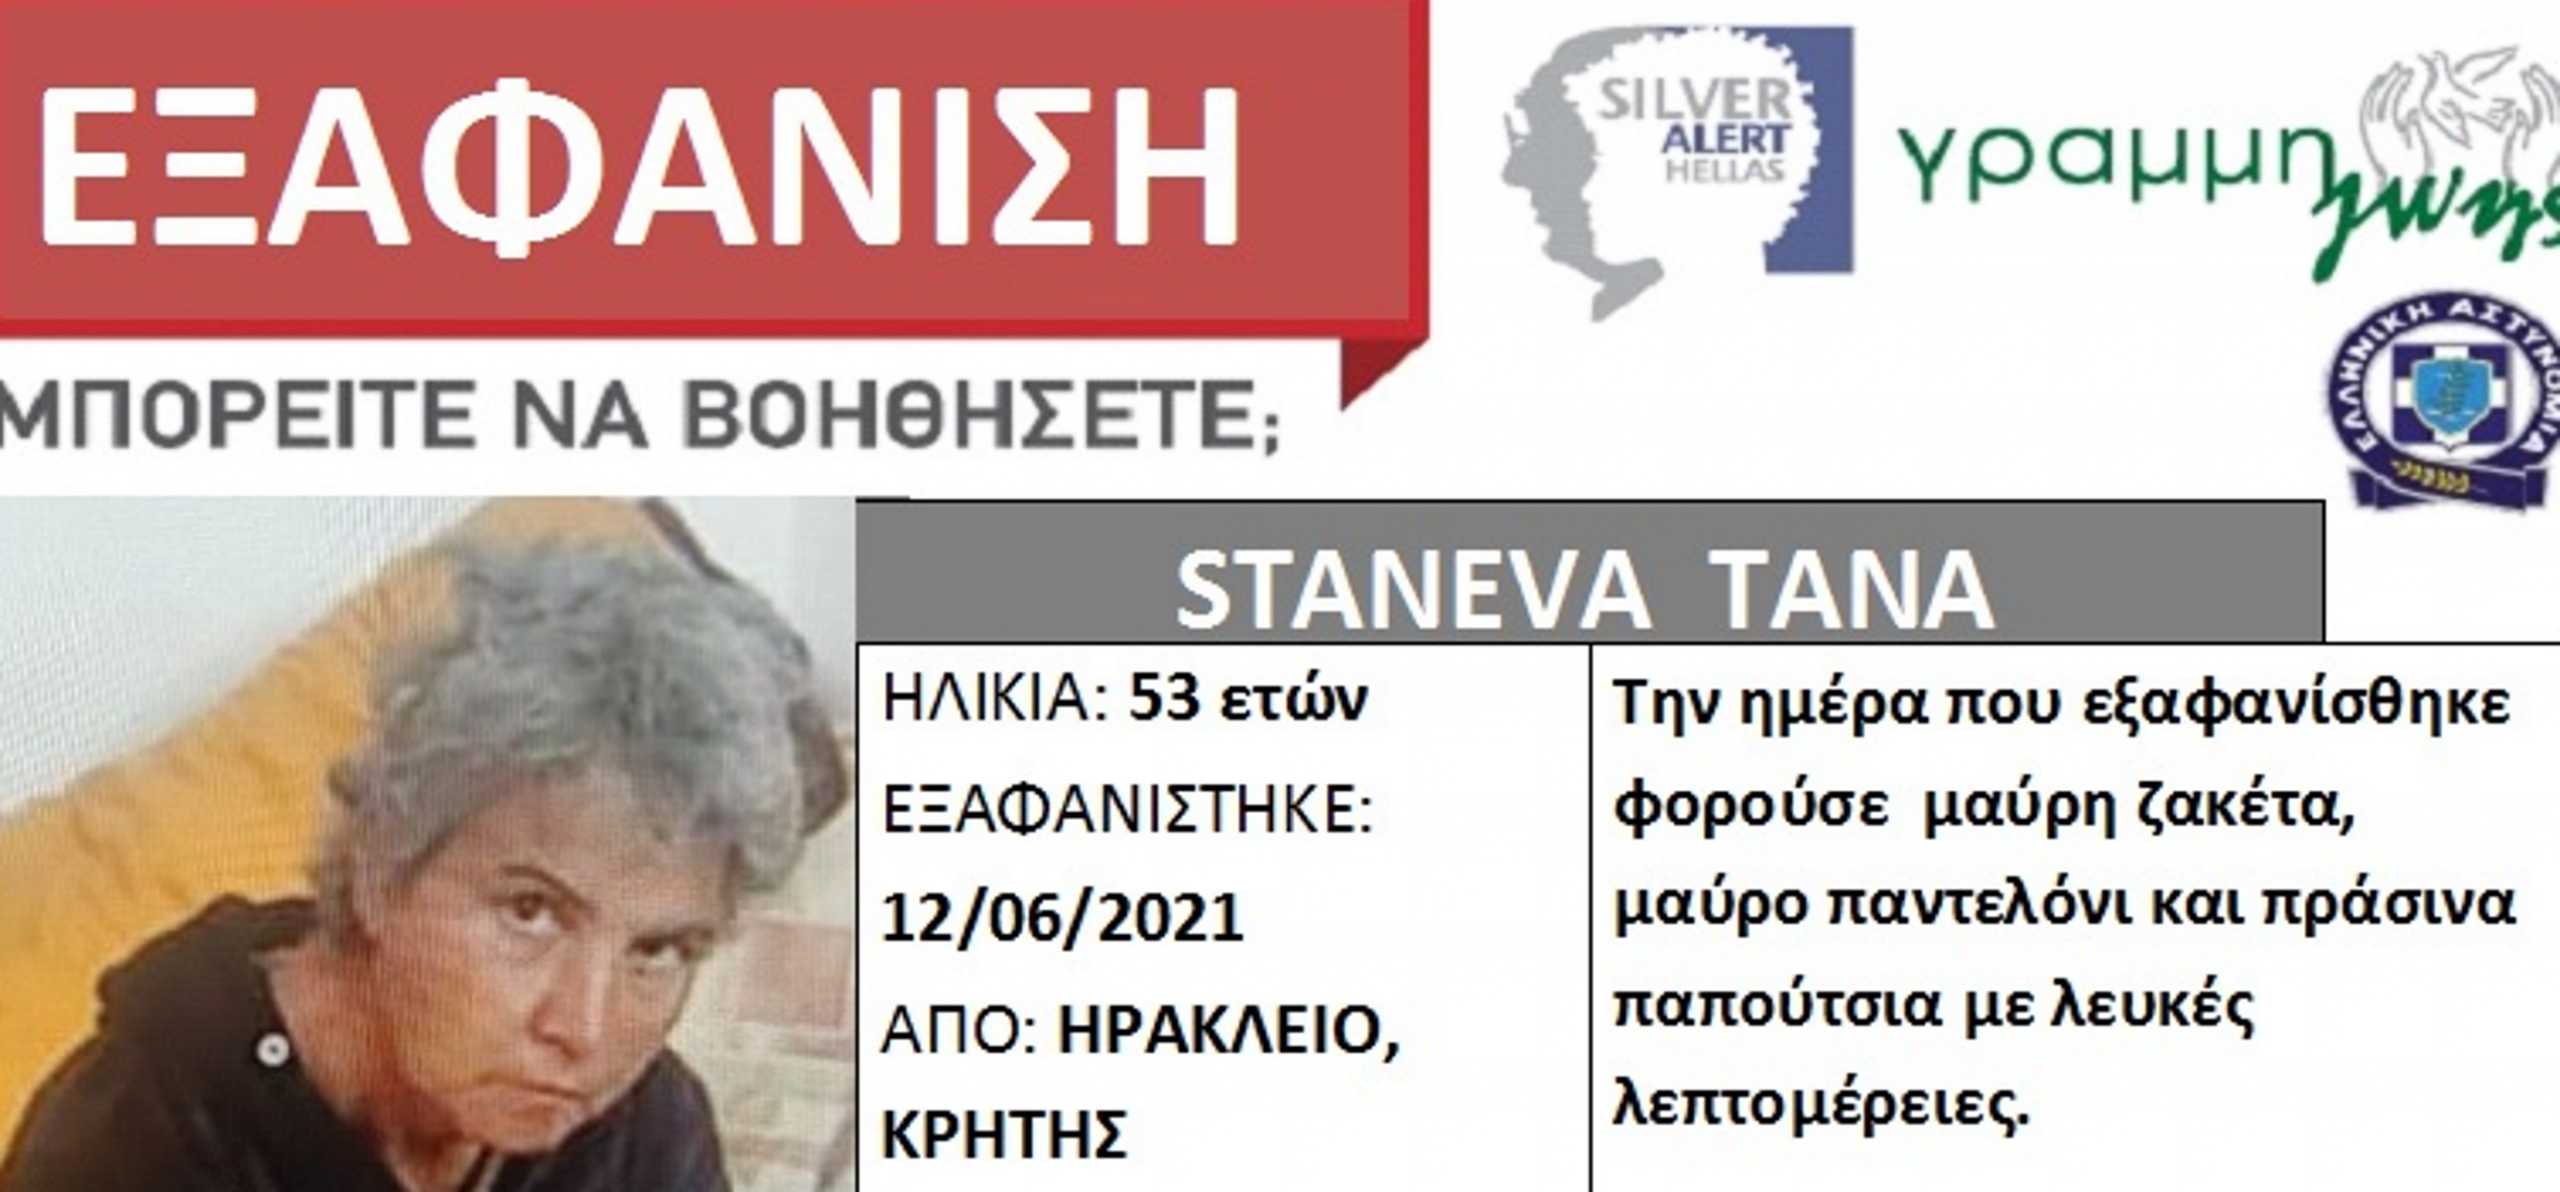 Silver Alert για 53χρονη στο Ηράκλειο